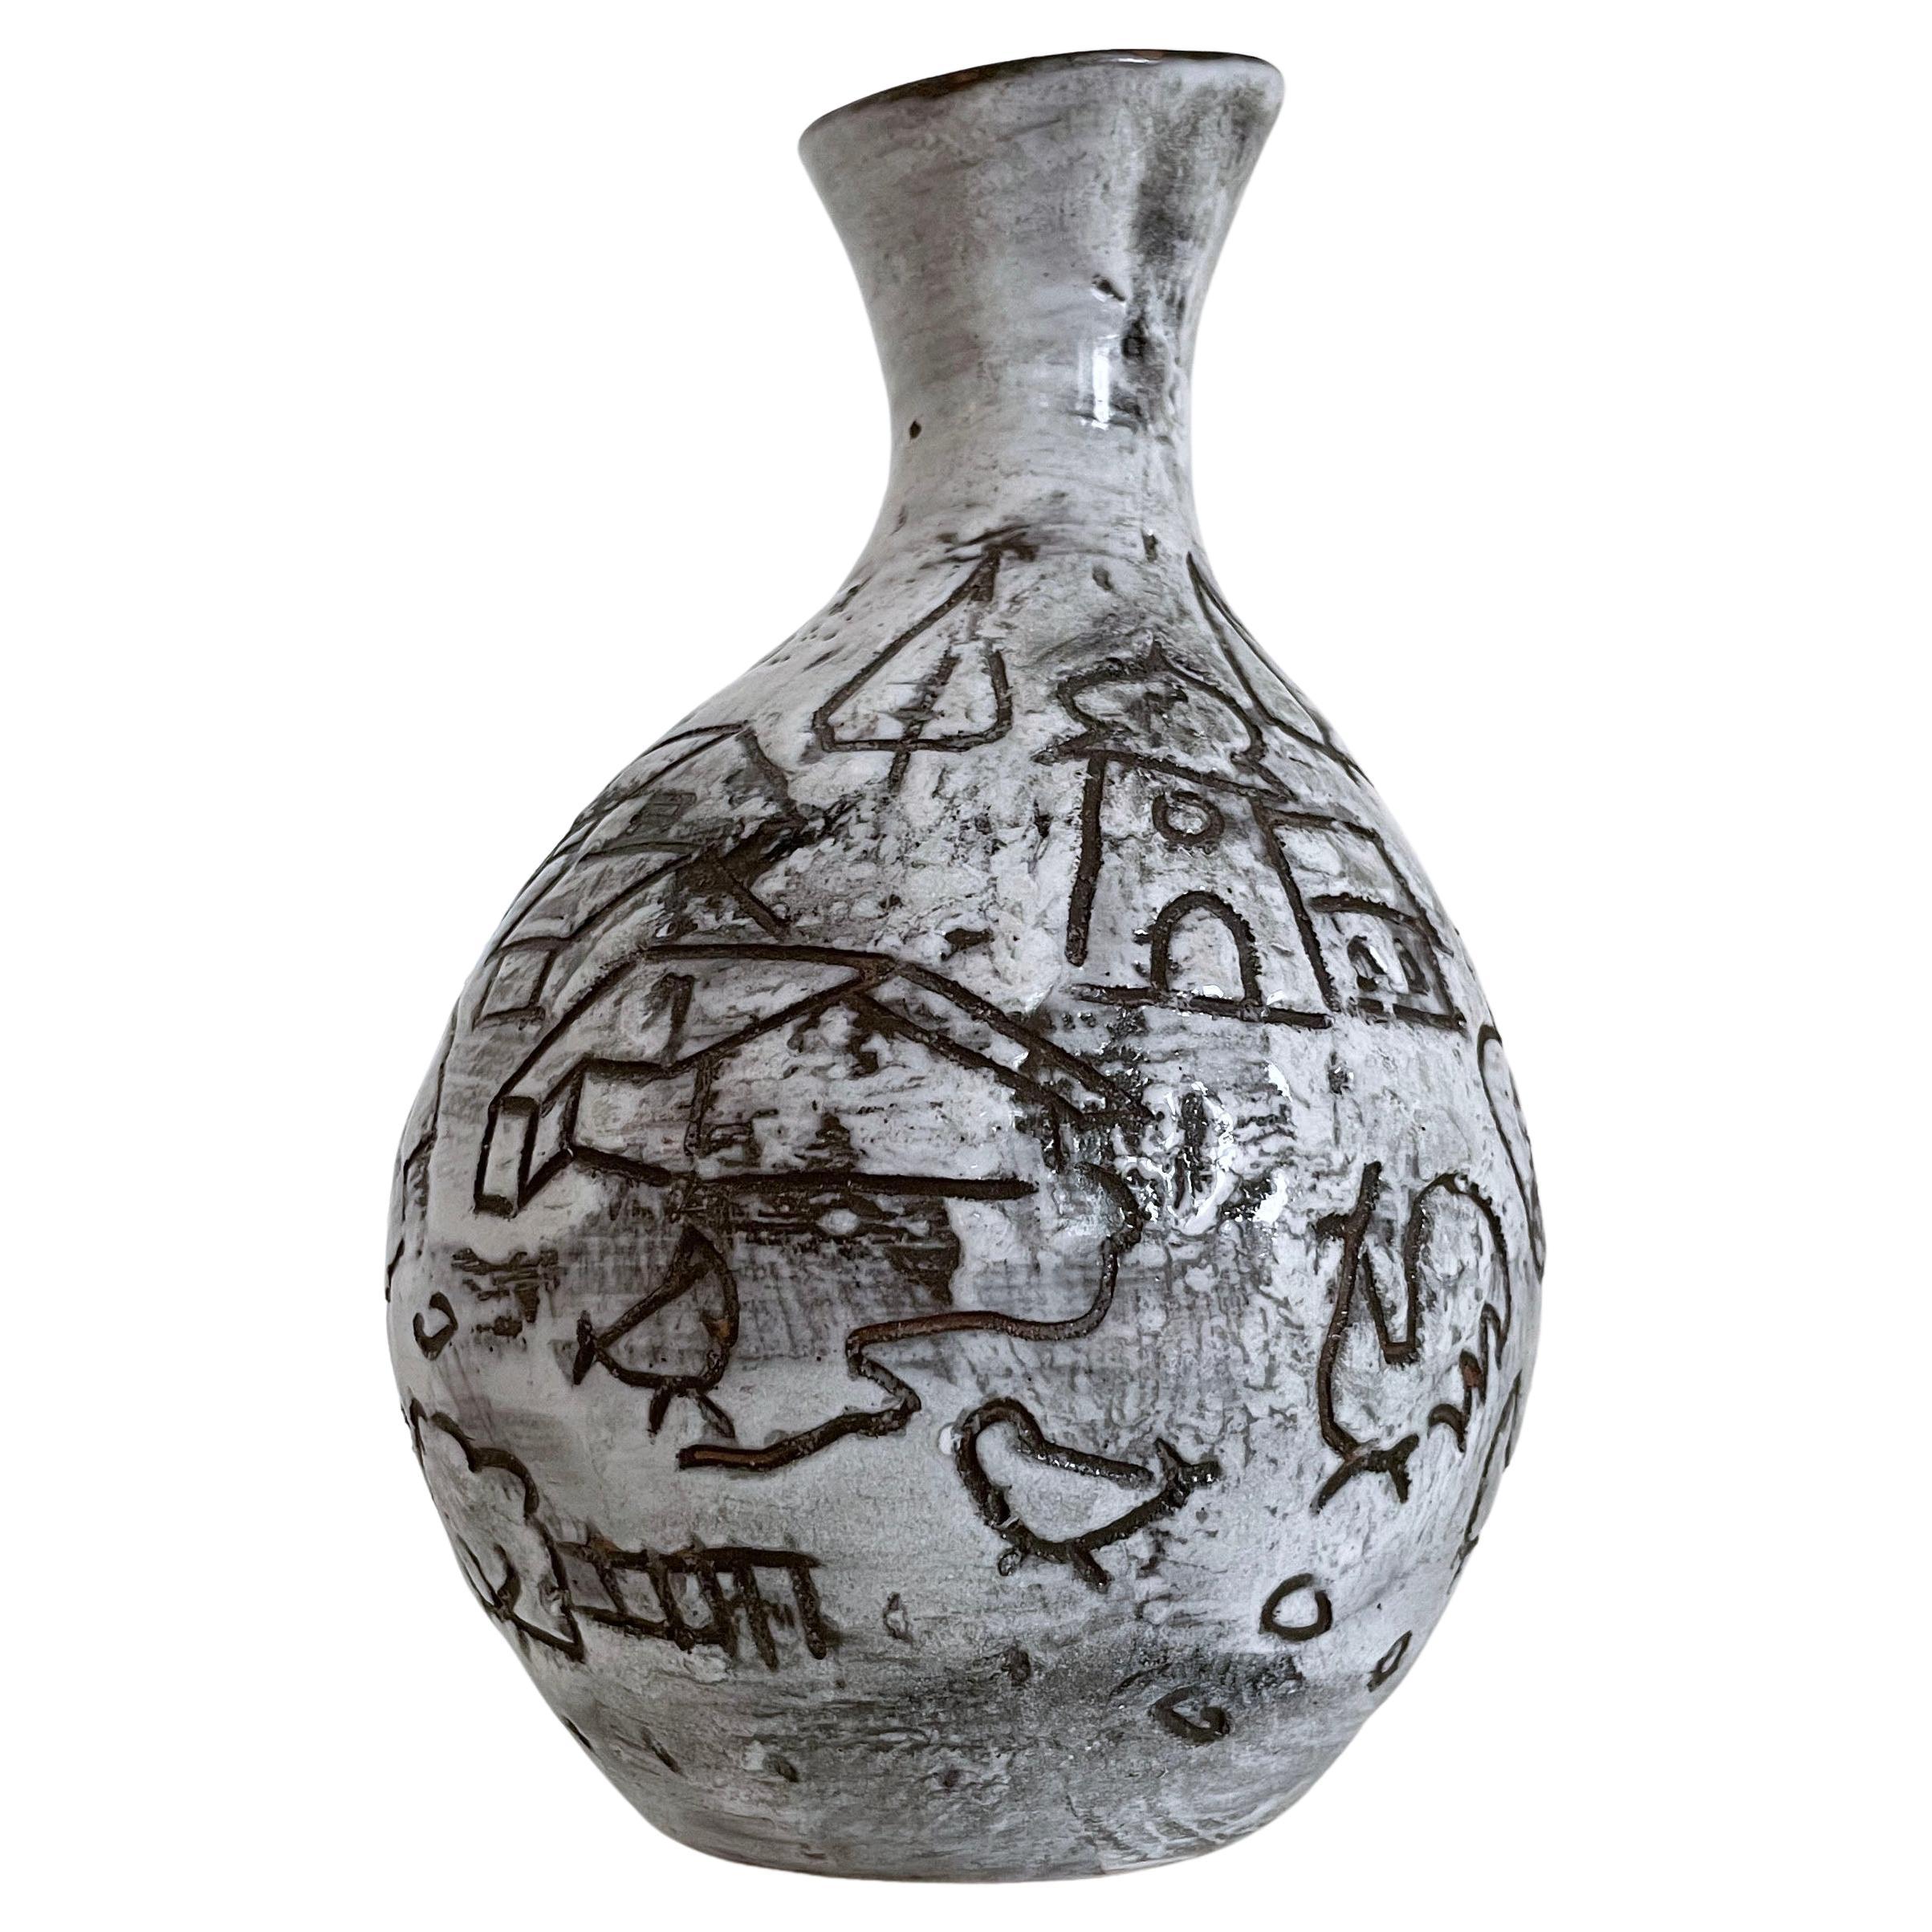 Gustav Spörri Ceramic Vase. No: 65476 69, Ziegler Keramik, Switzerland 1969